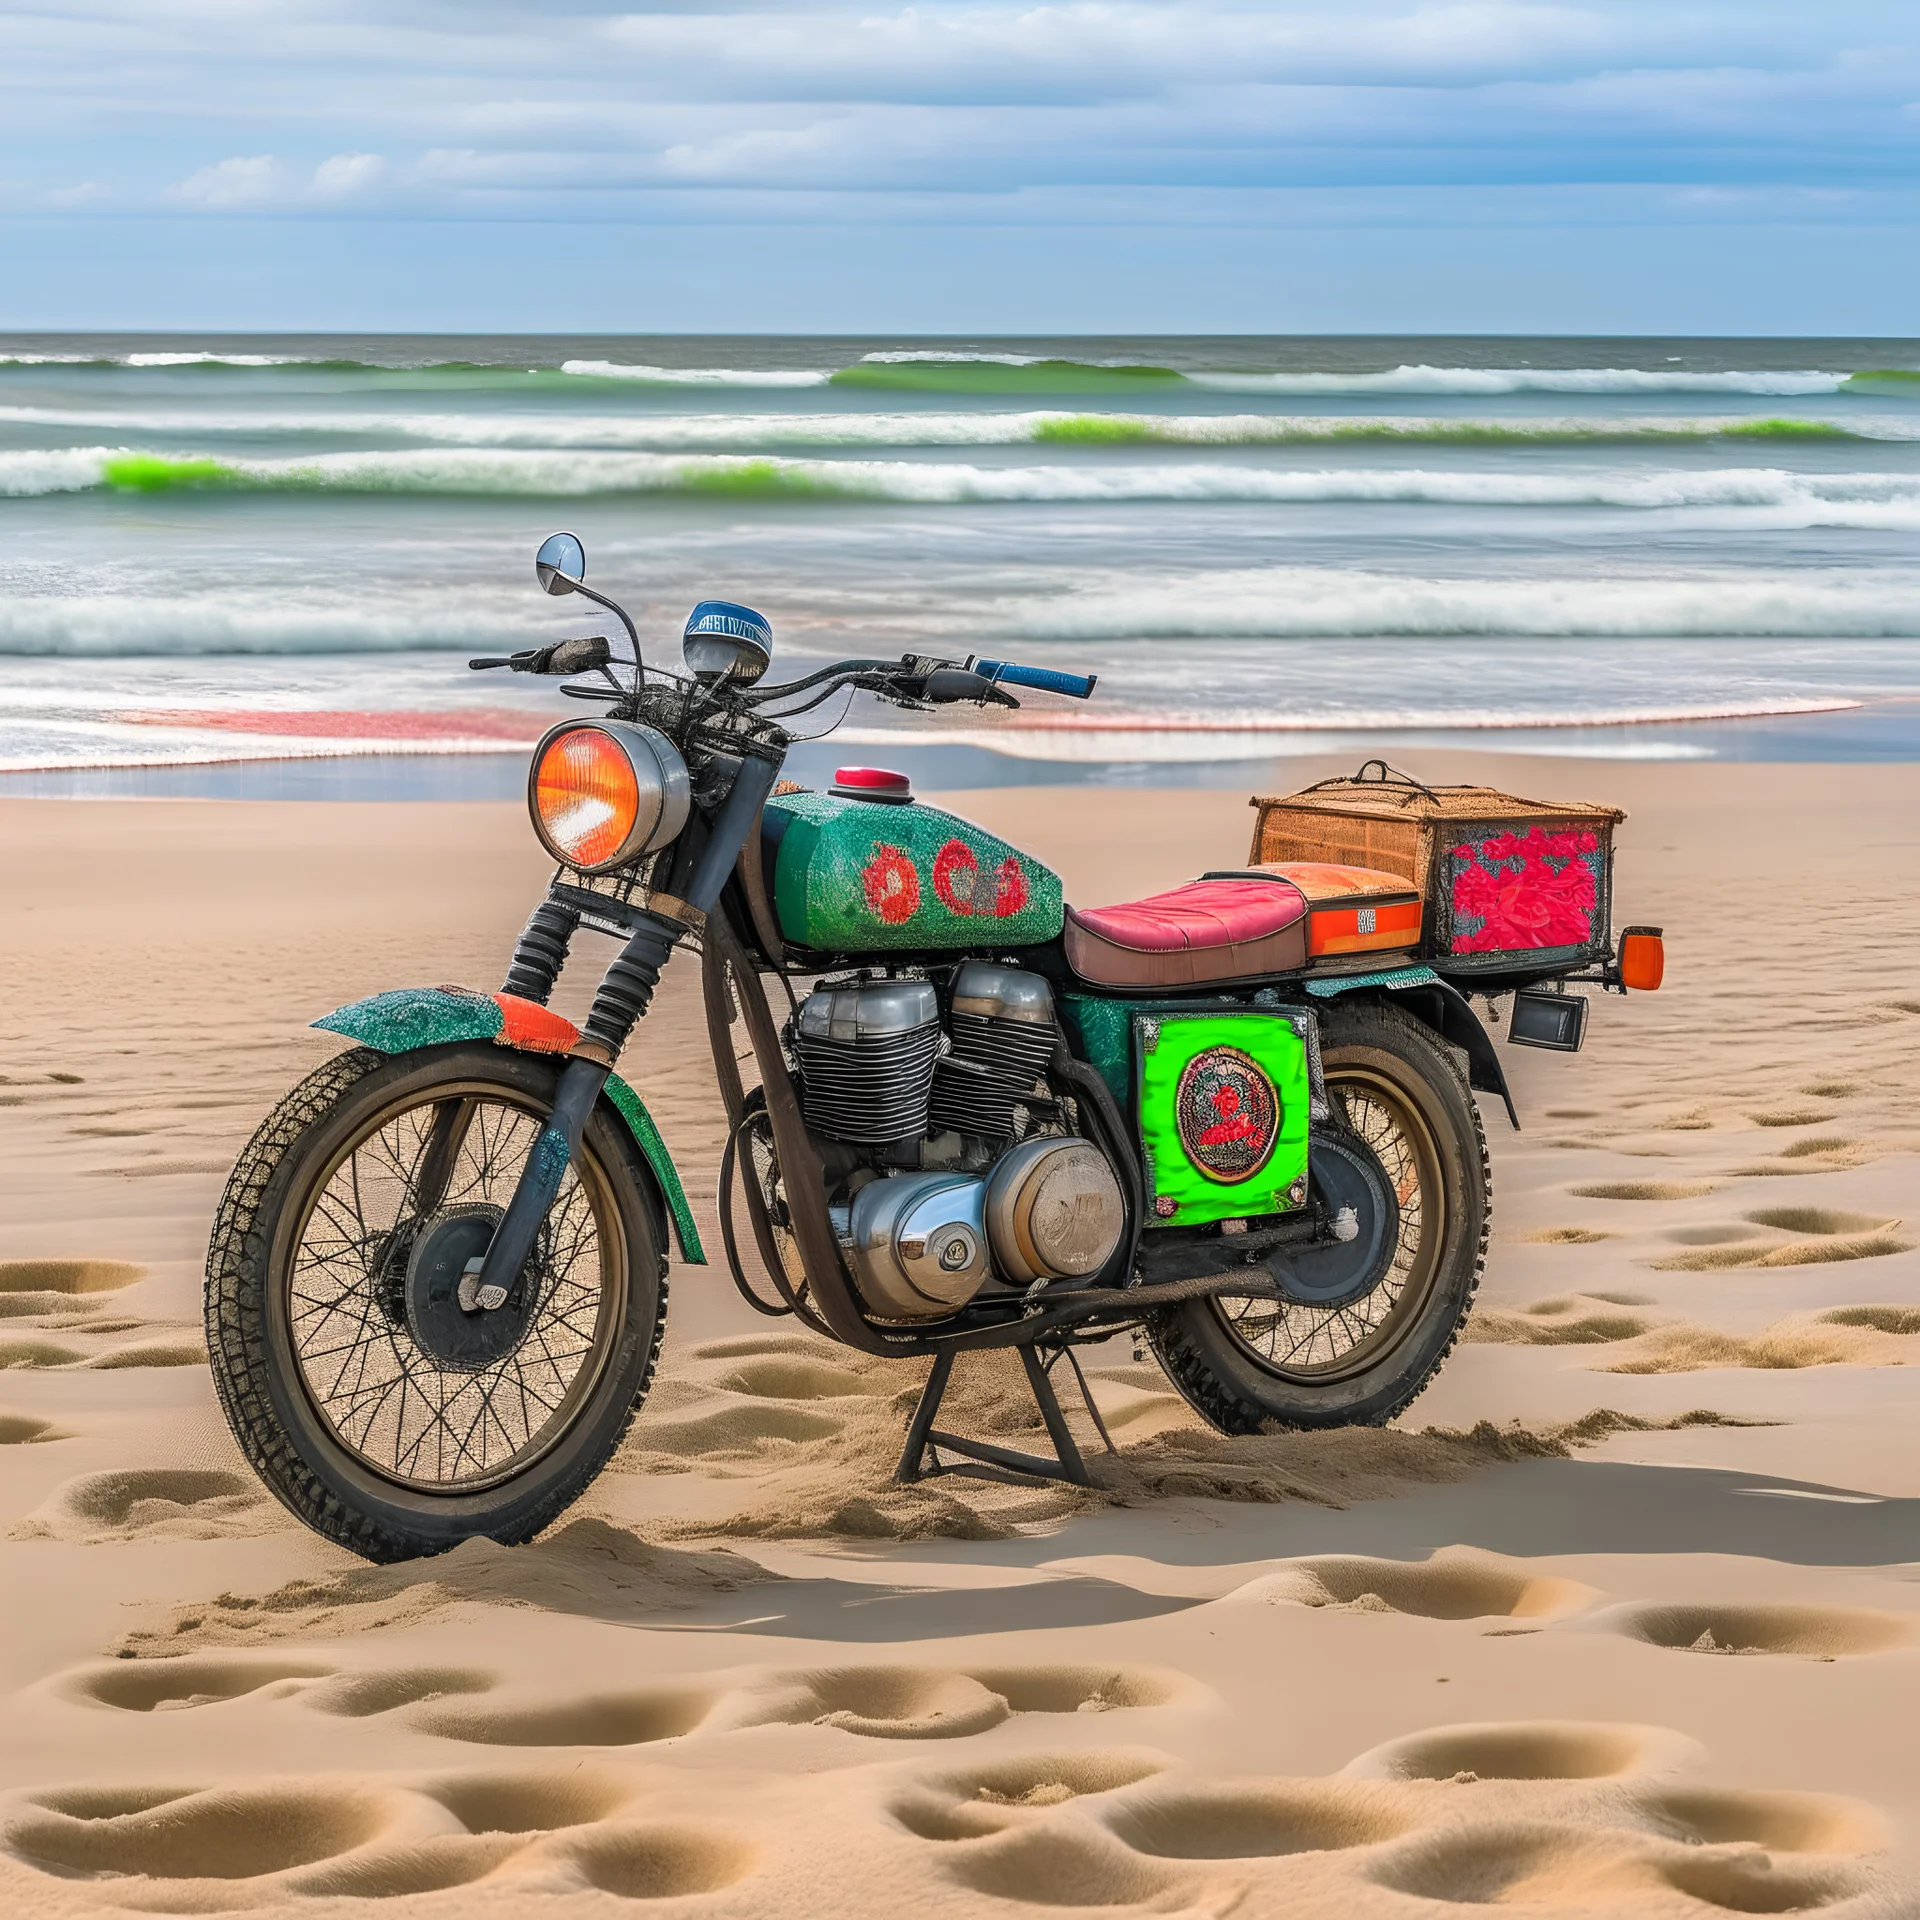 Driverless hippie motorcycle at beach